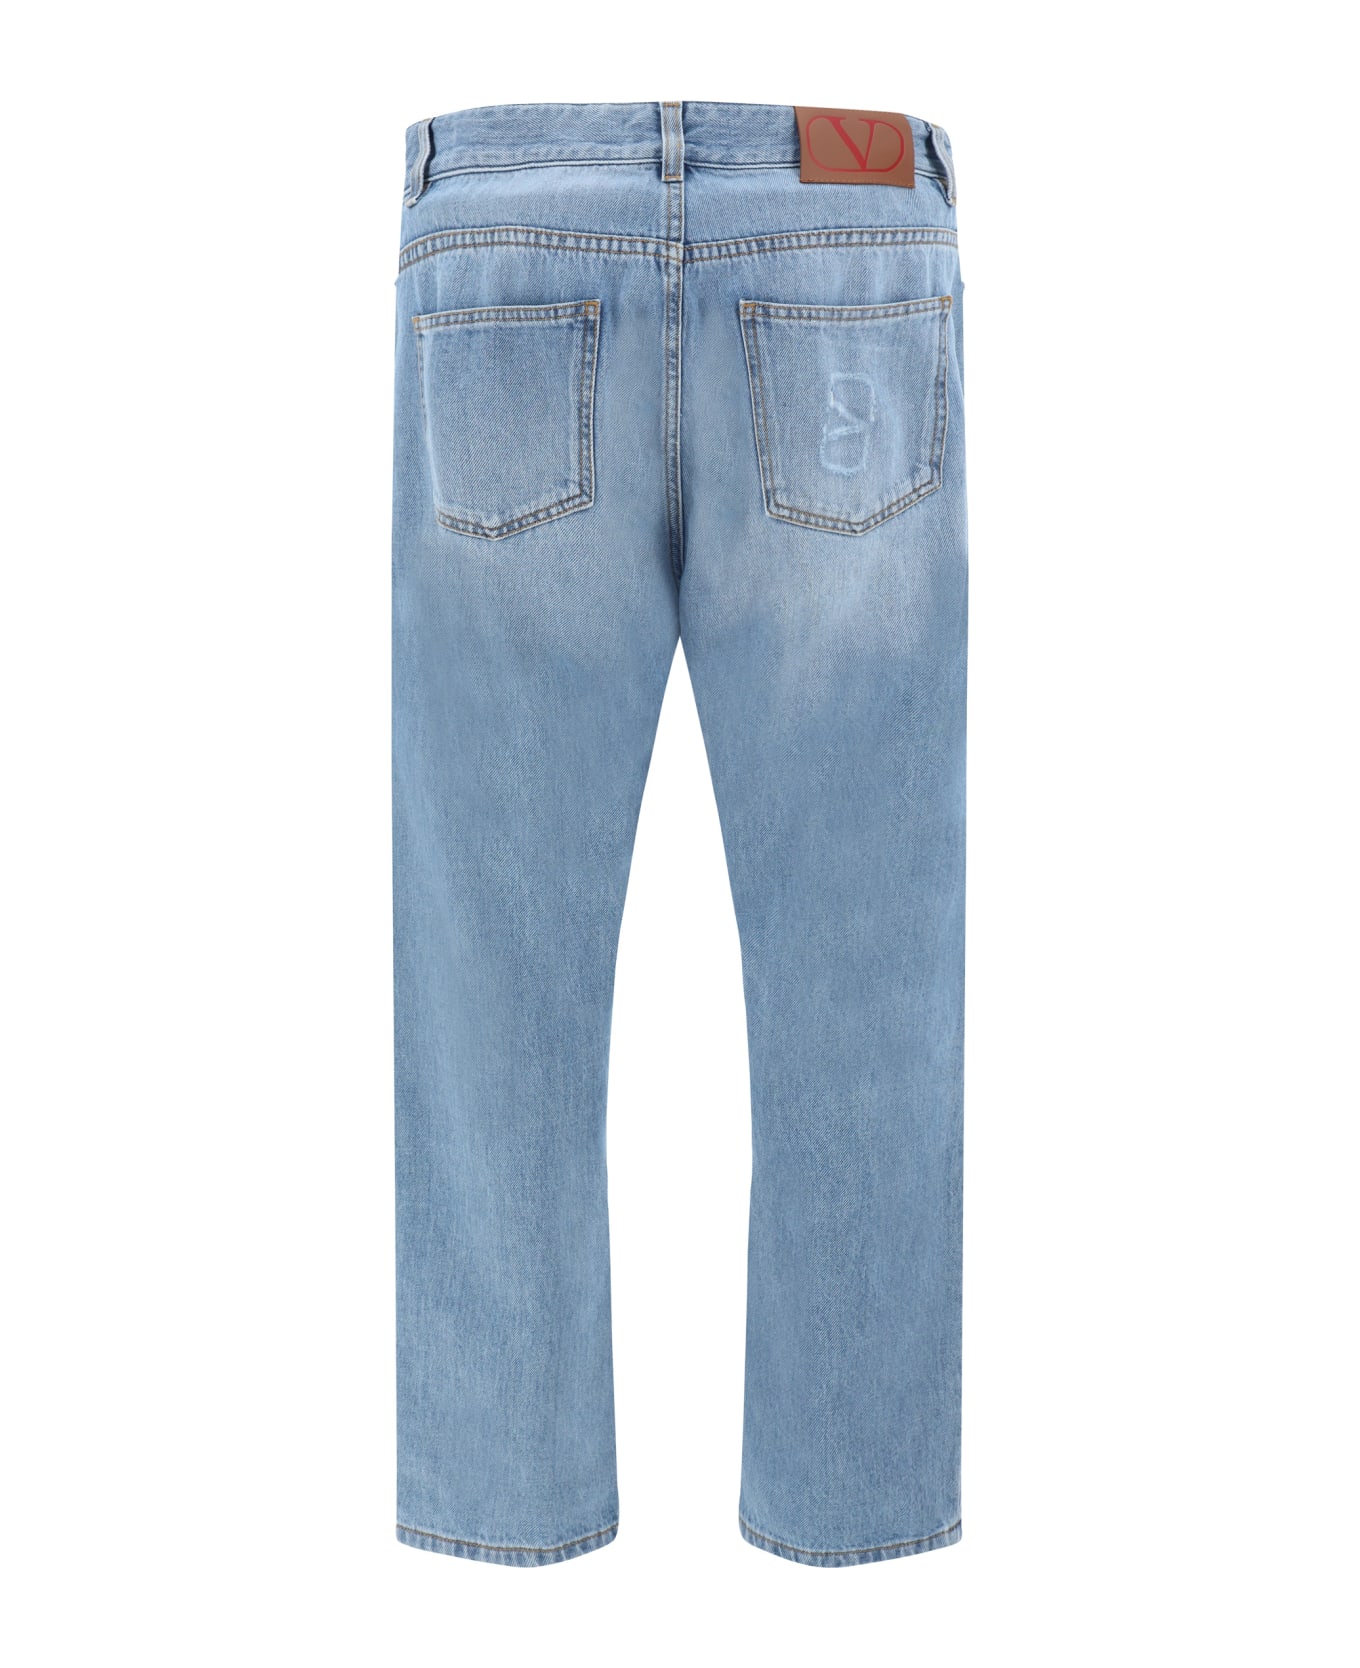 Valentino Cotton Denim Jeans - Denim Blu Lav Chiaro